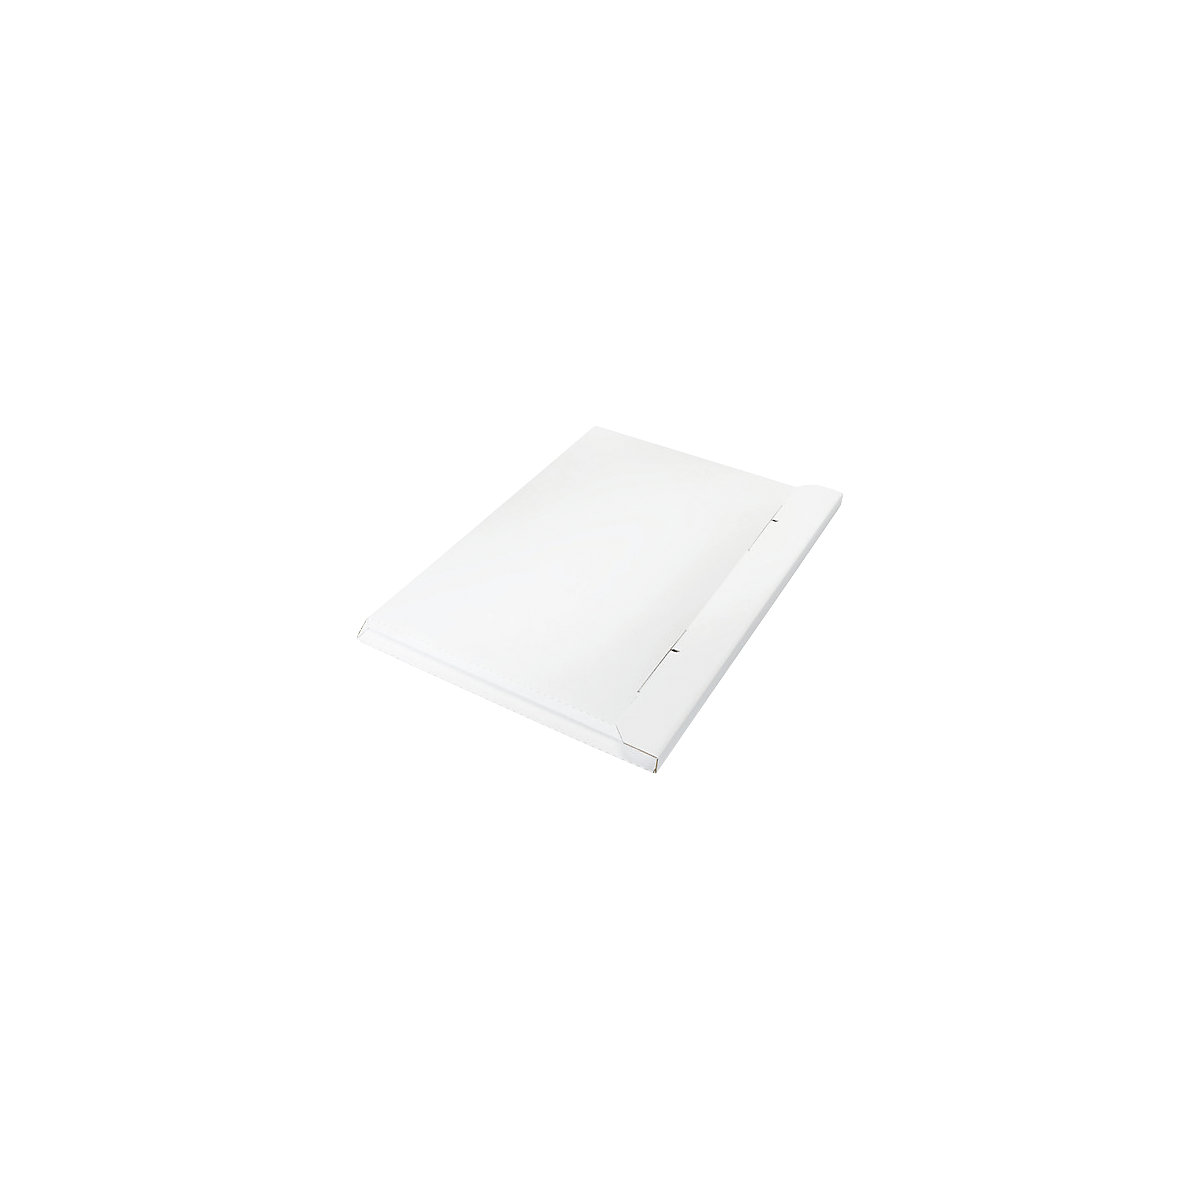 Flach-/Kalender-Pack, 1-wellig, Innen-LxBxH 570 x 395 x 10 mm, weiß, ab 20 Stk-3